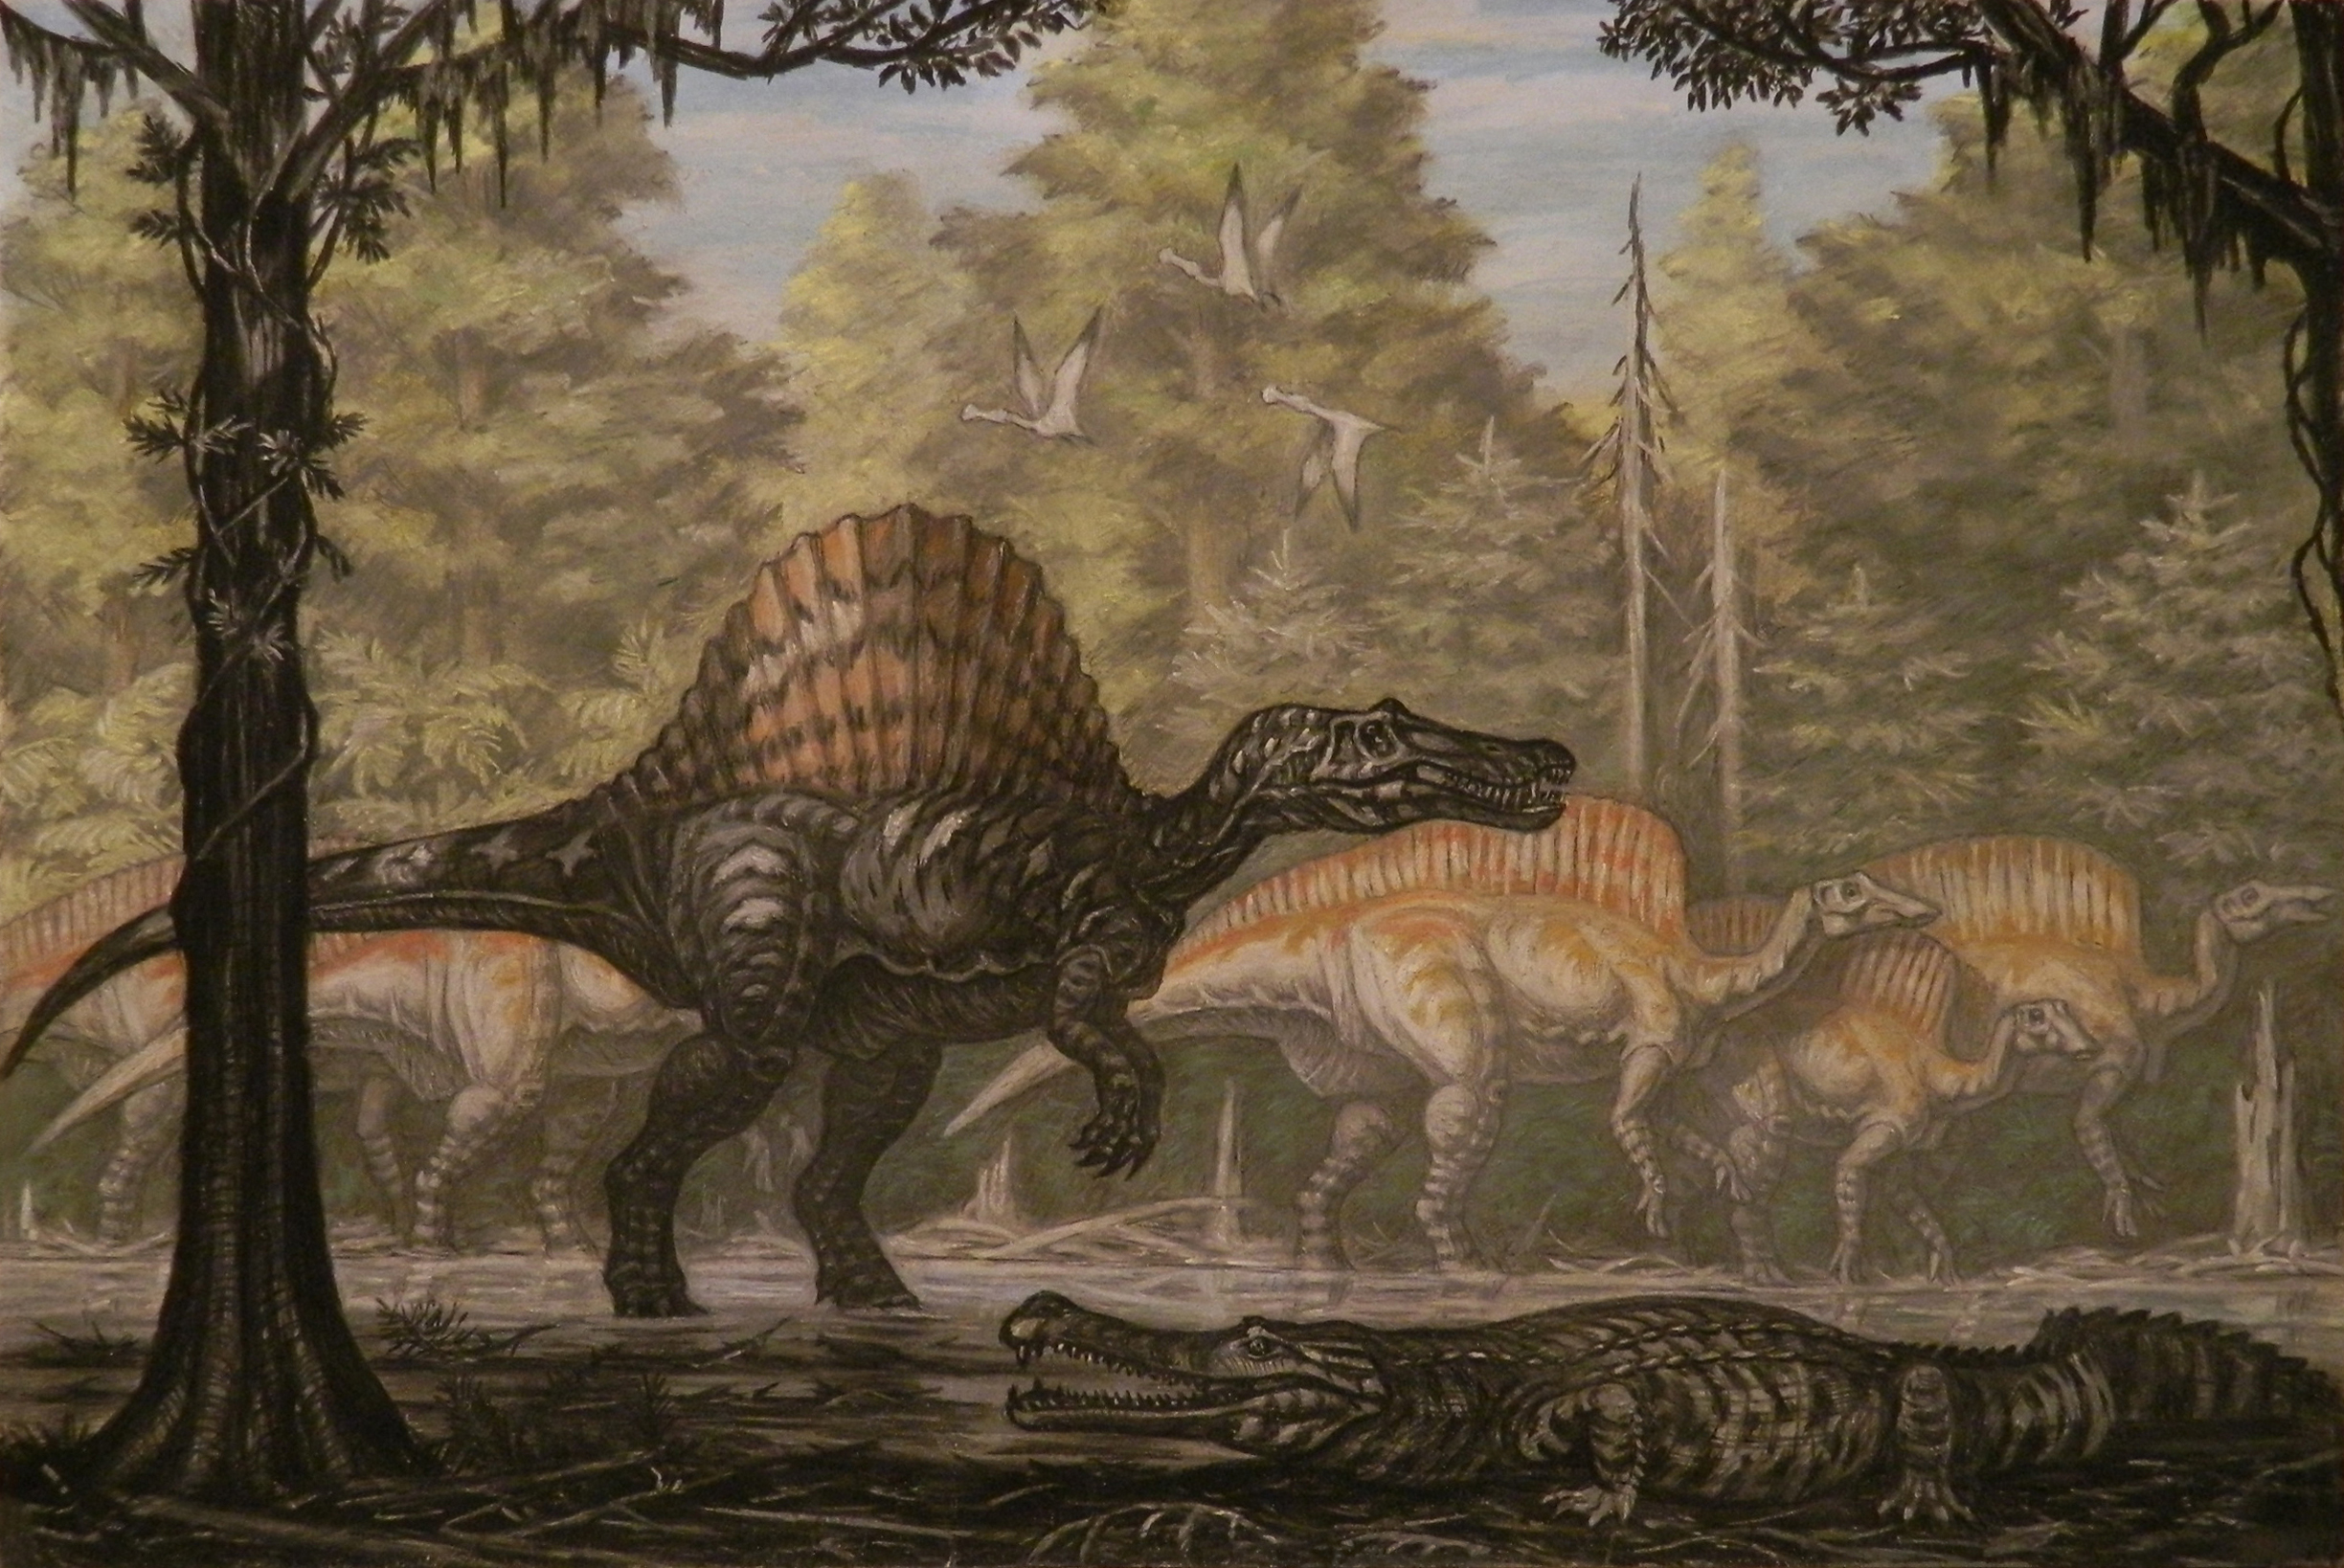 Rei dinossauro Parasaurolophus Ouranosaurus Spinosaurus